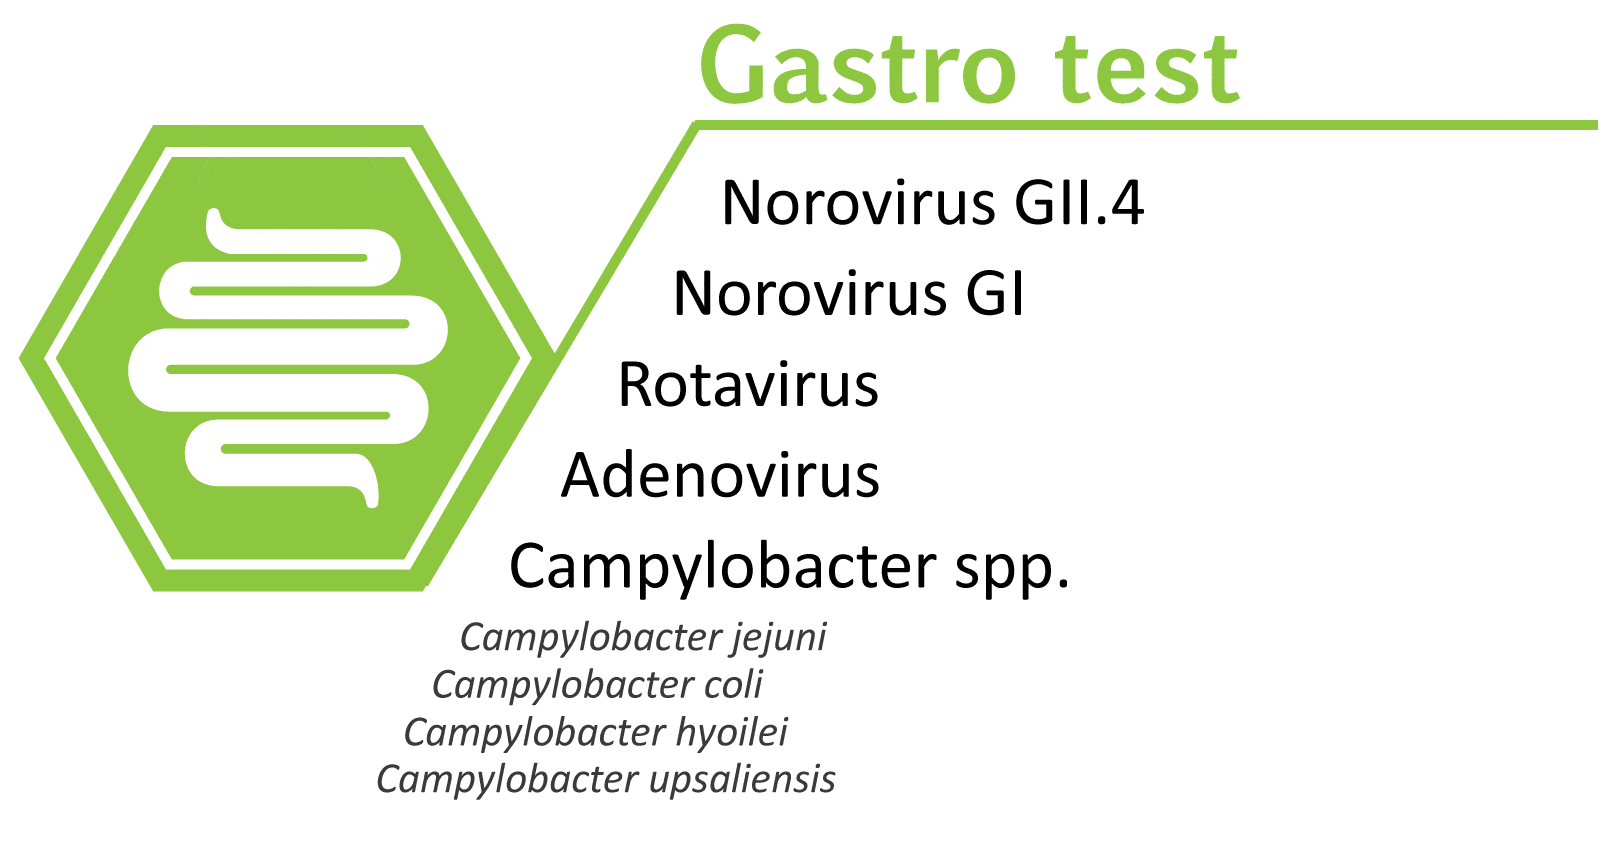 mariPOC Gastro test panel